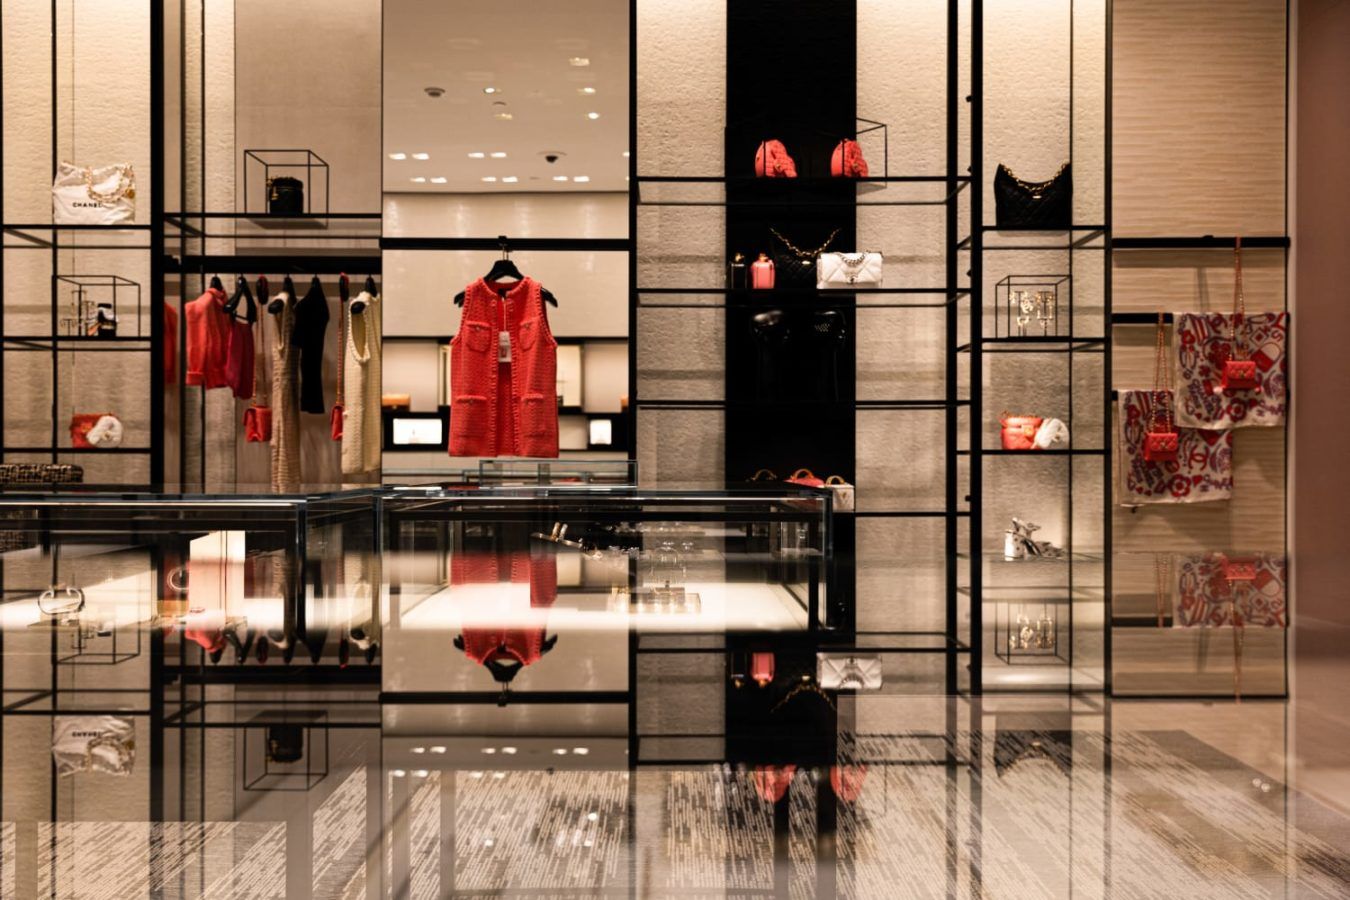 Chanel has re-opened its Suvarnabhumi boutique